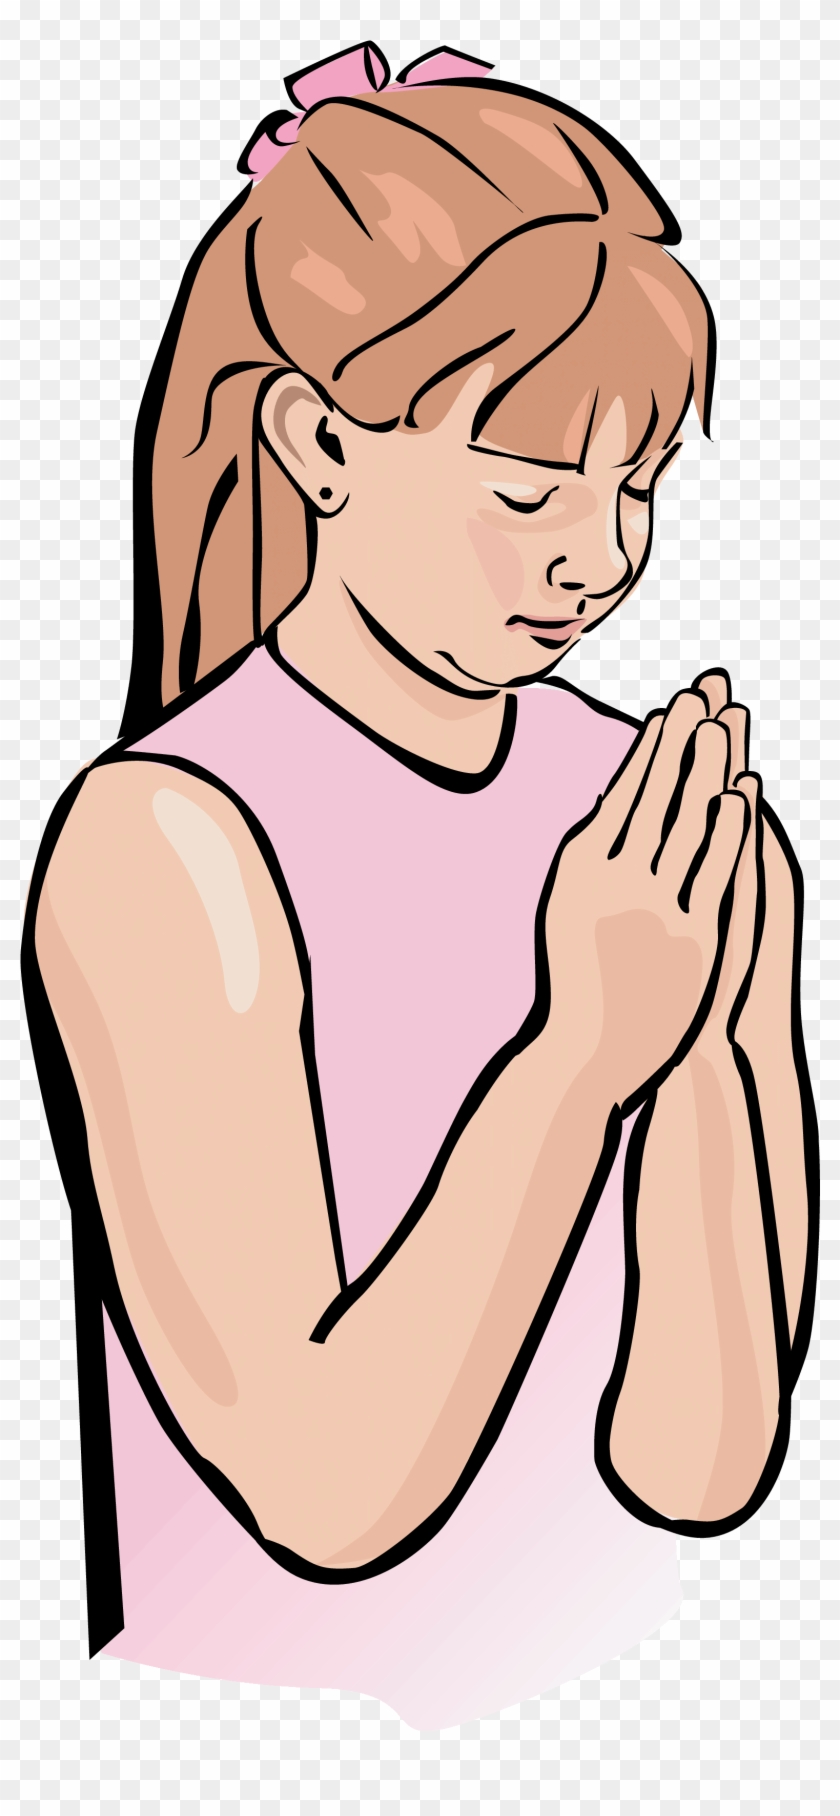 Download Child Prayer Clipart Pray God Clip Art Free Transparent Png Clipart Images Download